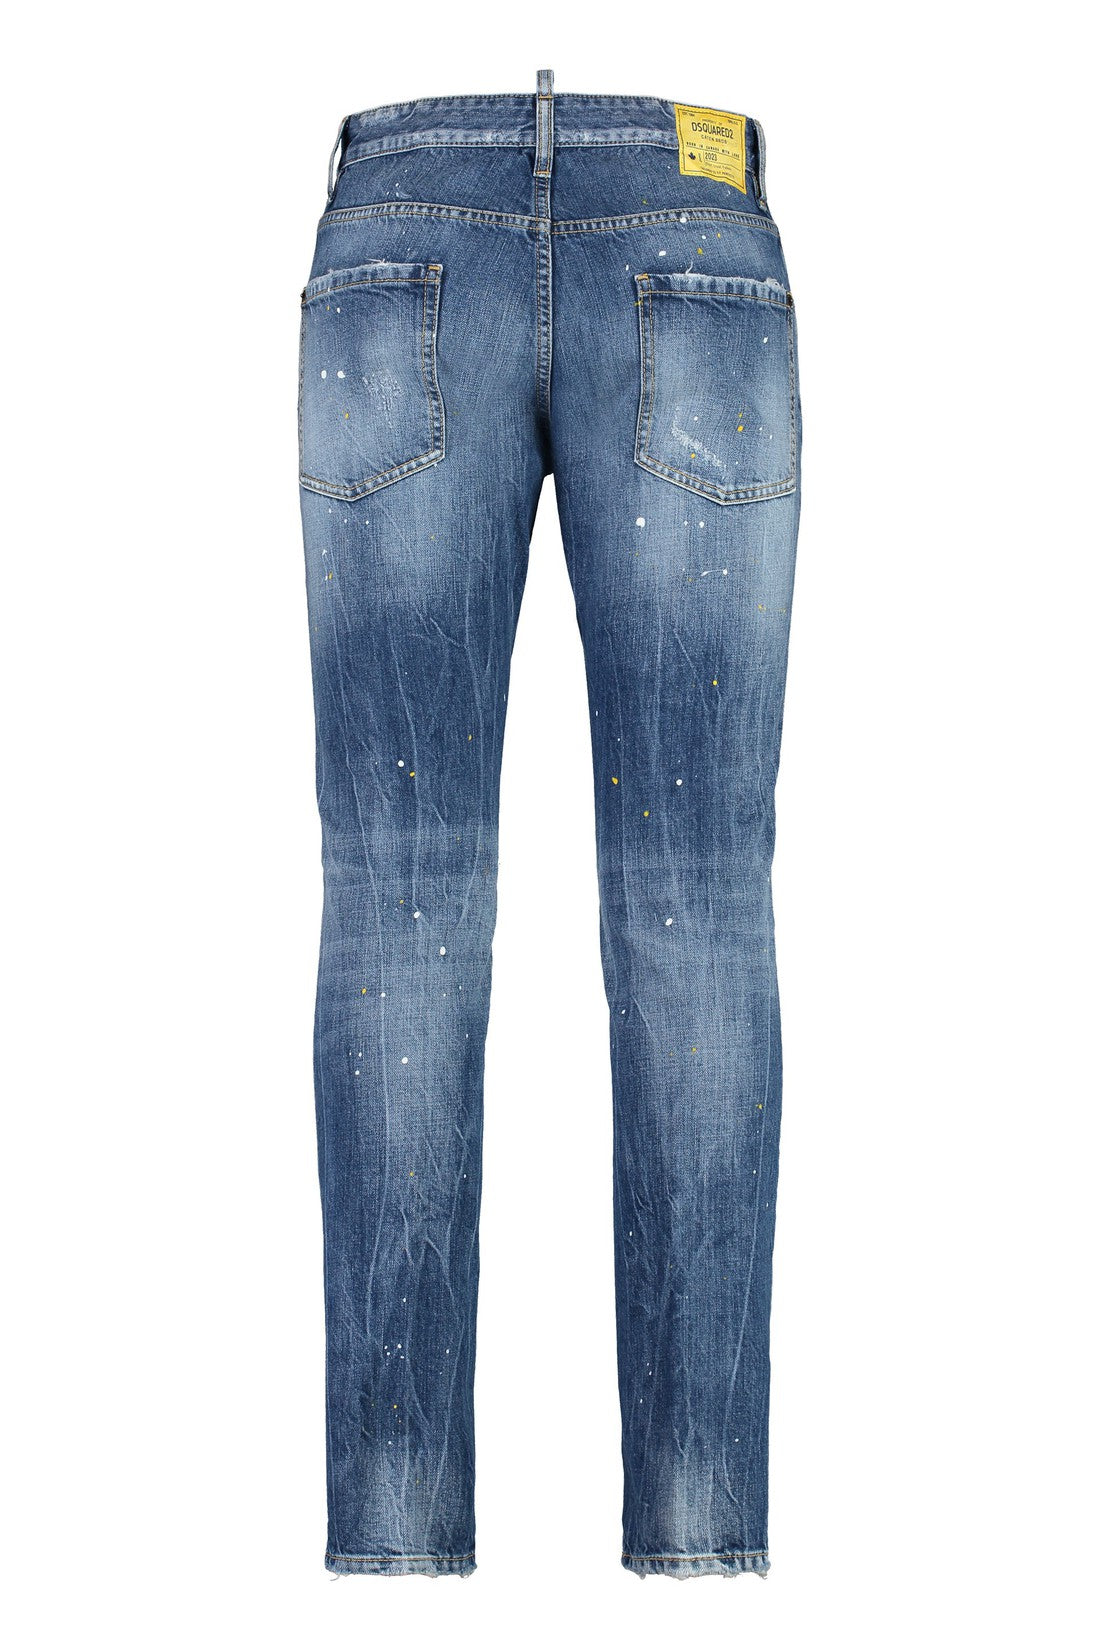 Dsquared2-OUTLET-SALE-Cool Guy 5-pocket jeans-ARCHIVIST